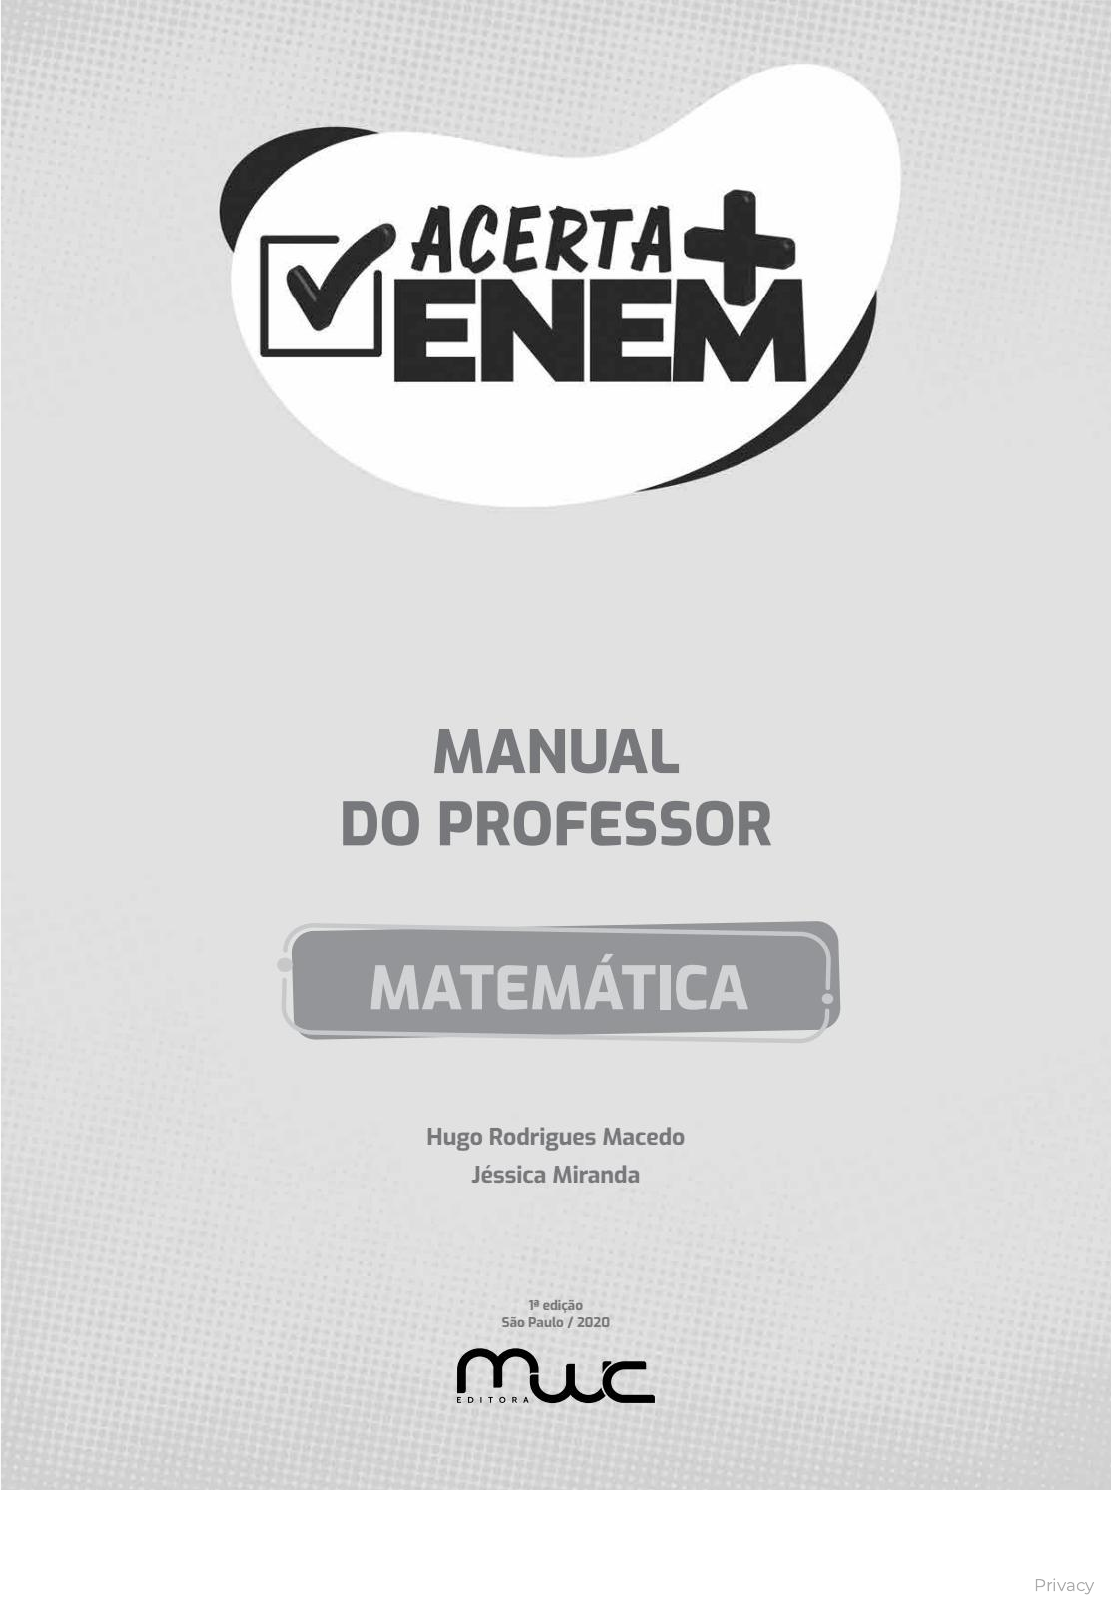 Acerta Mais Enem Matemática - Manual do Professor by editoramvc - Issuu